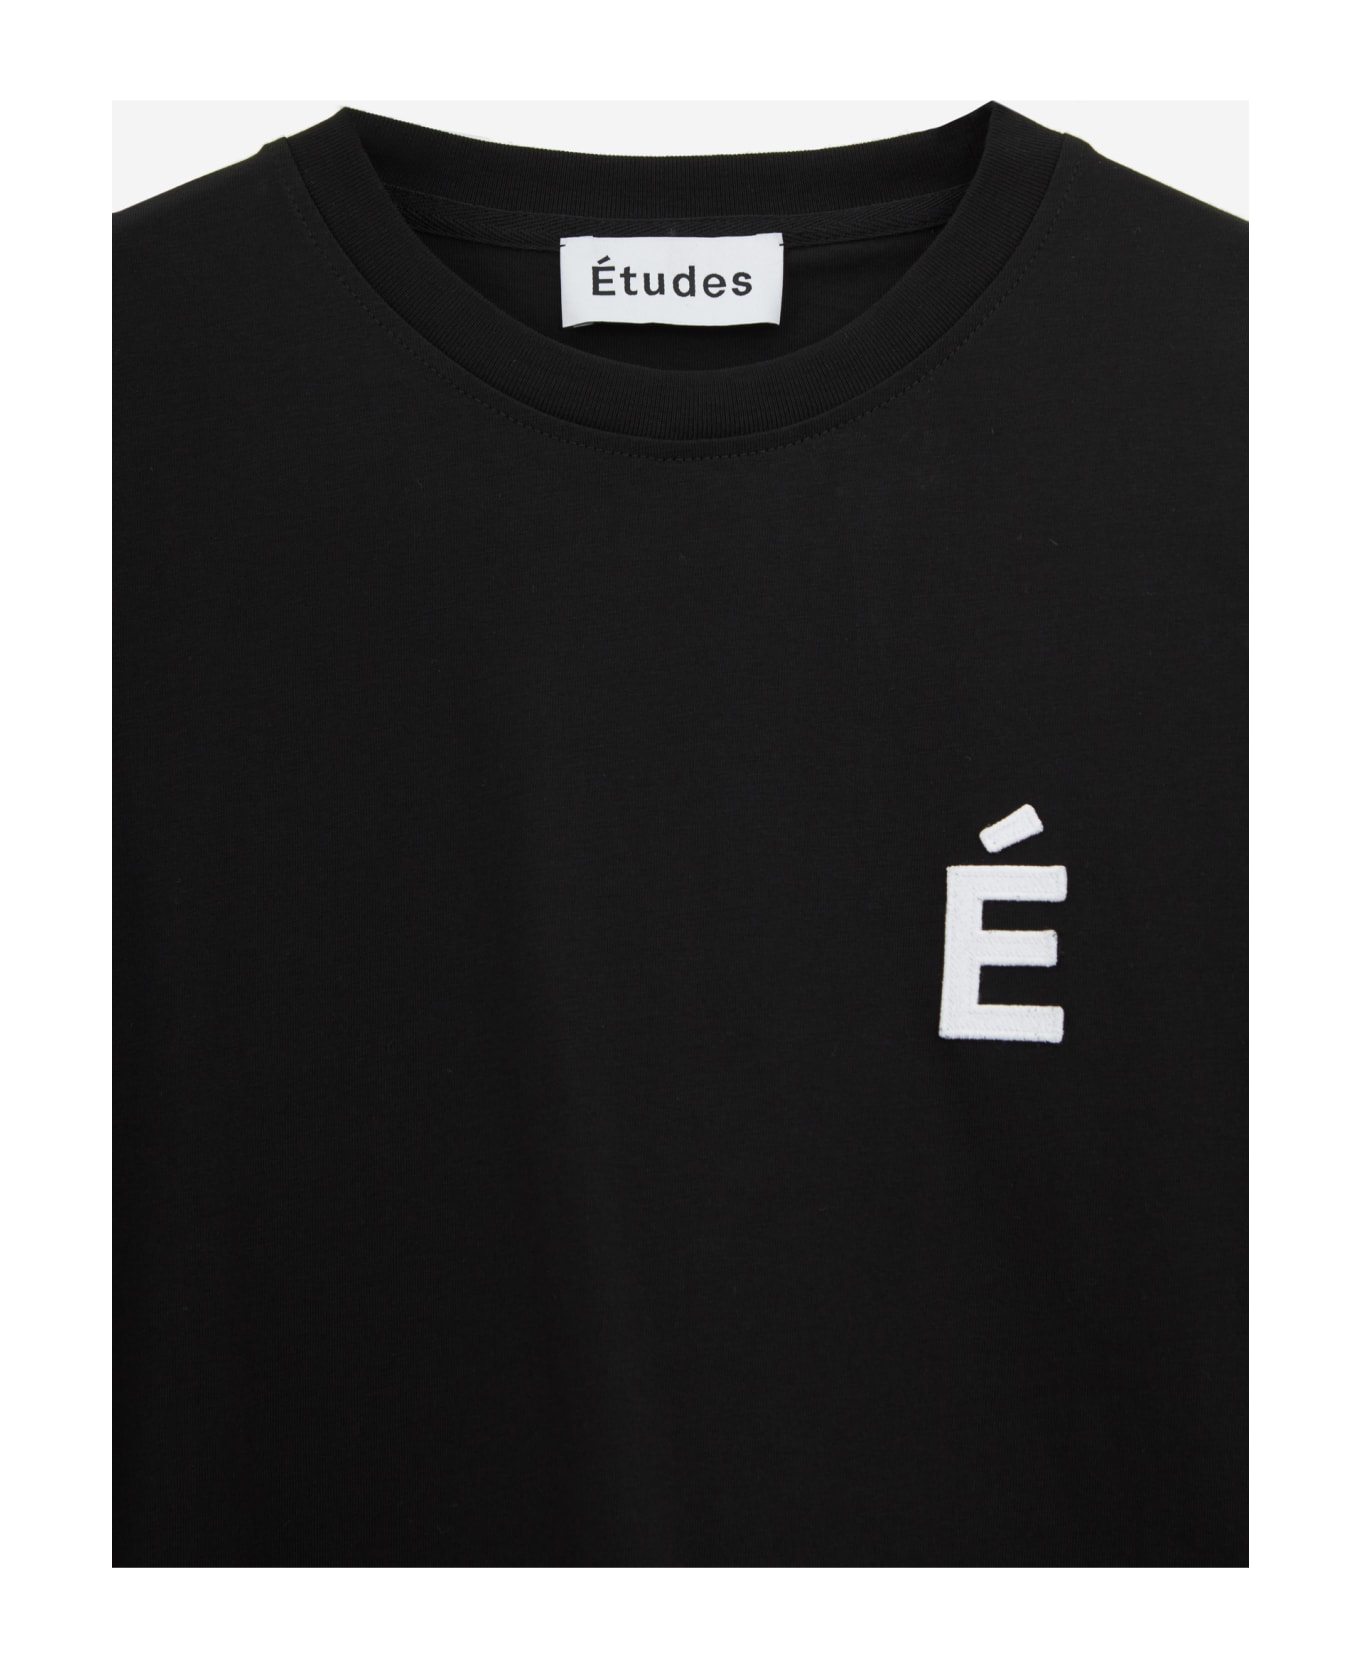 Études Wonder T-shirt - black